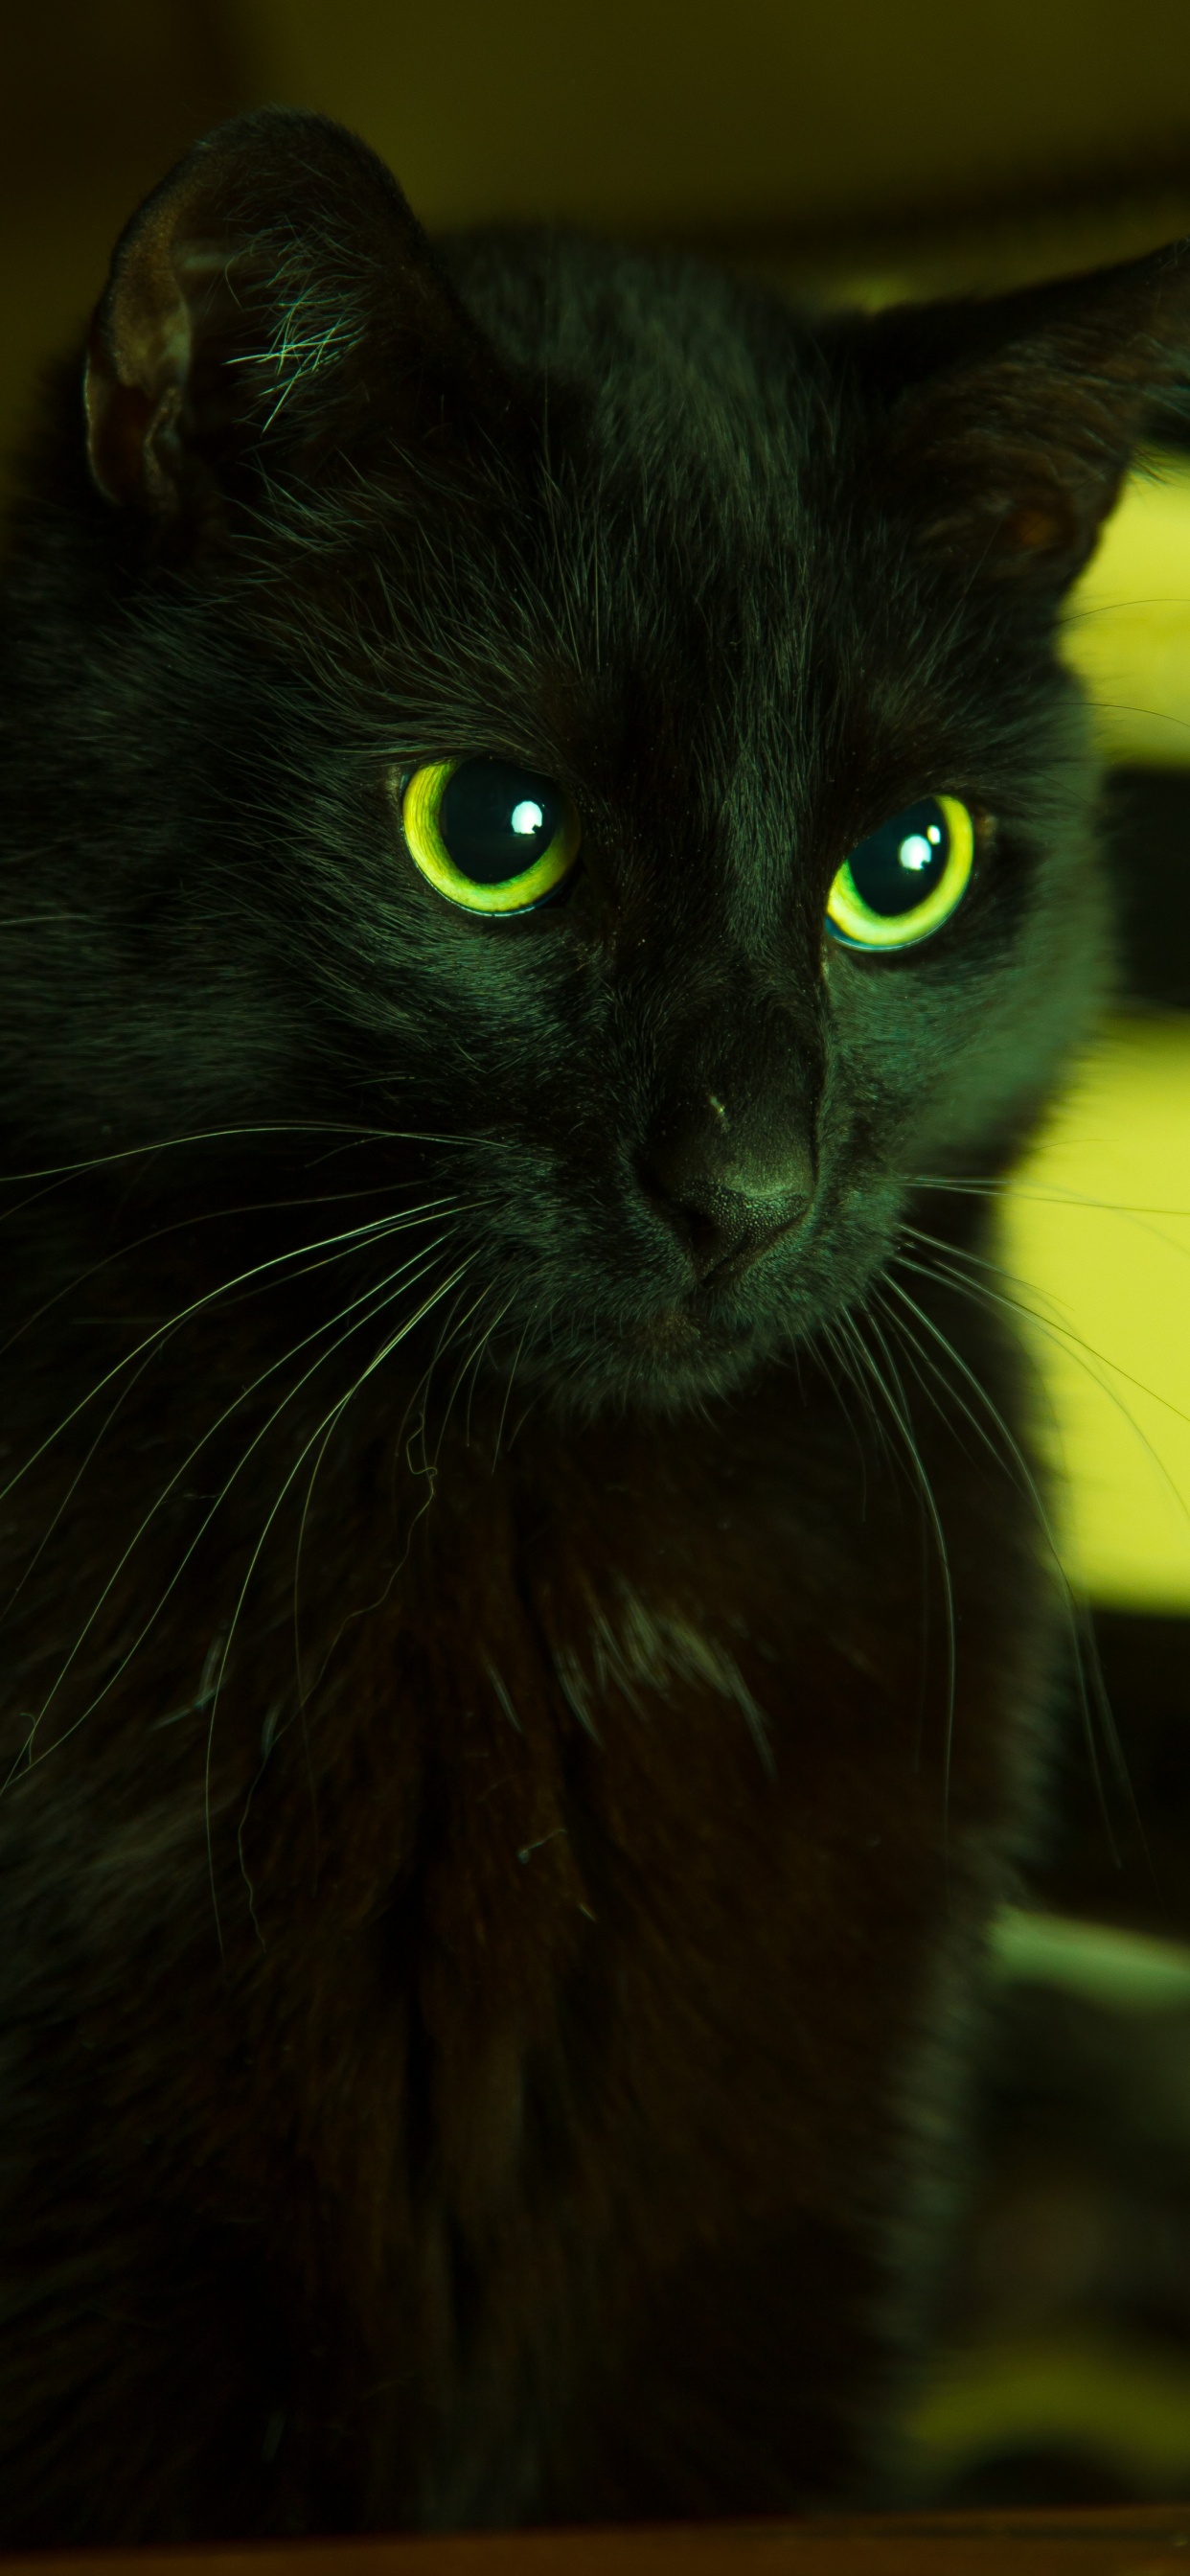 Black Cat in Tilt Shift Lens. Wallpaper in 1242x2688 Resolution